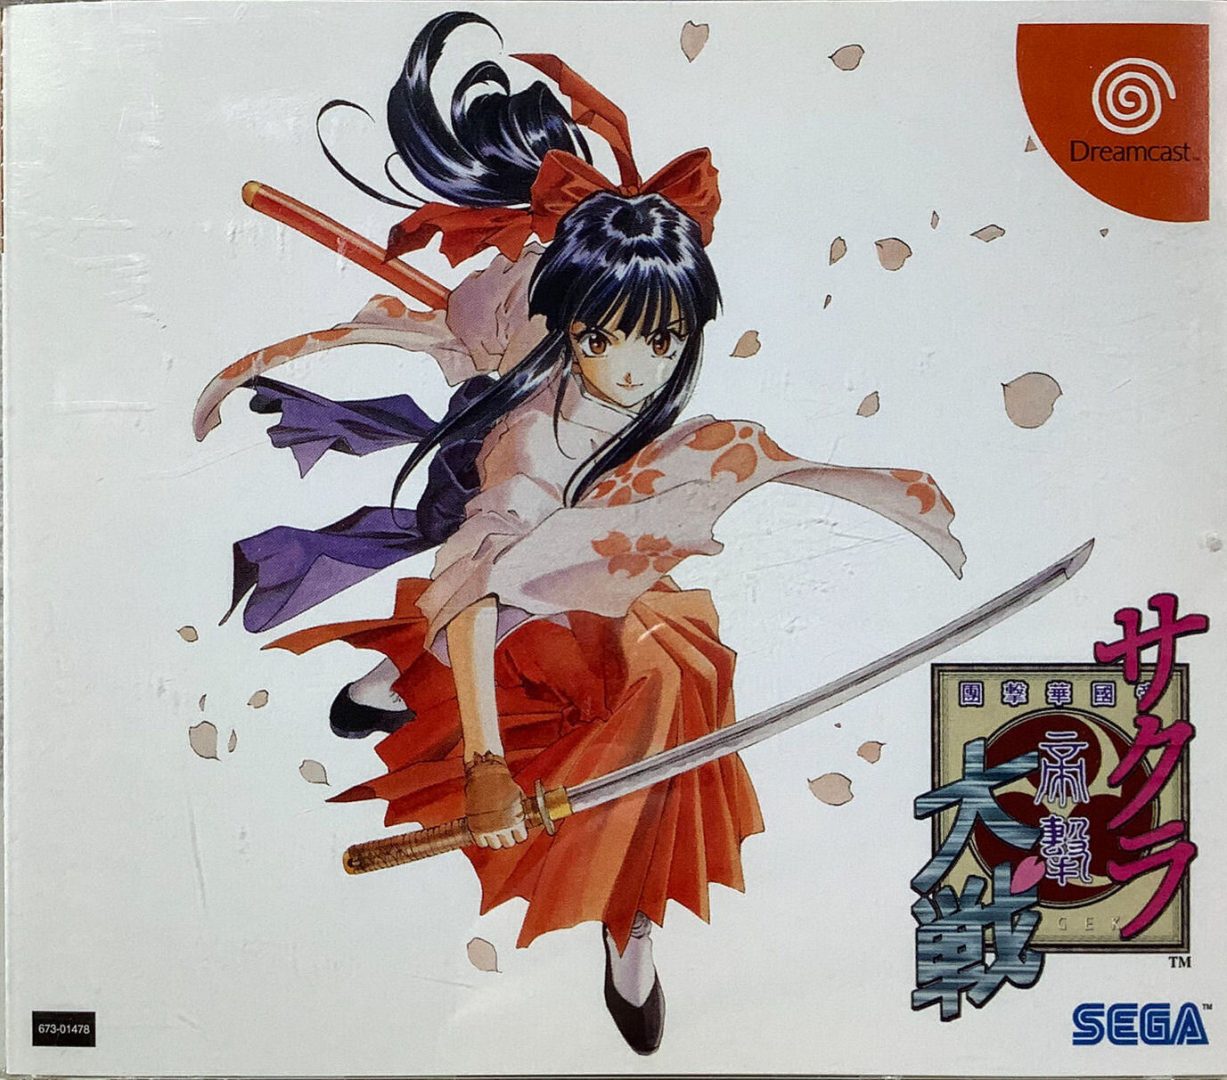 The coverart image of Sakura Taisen